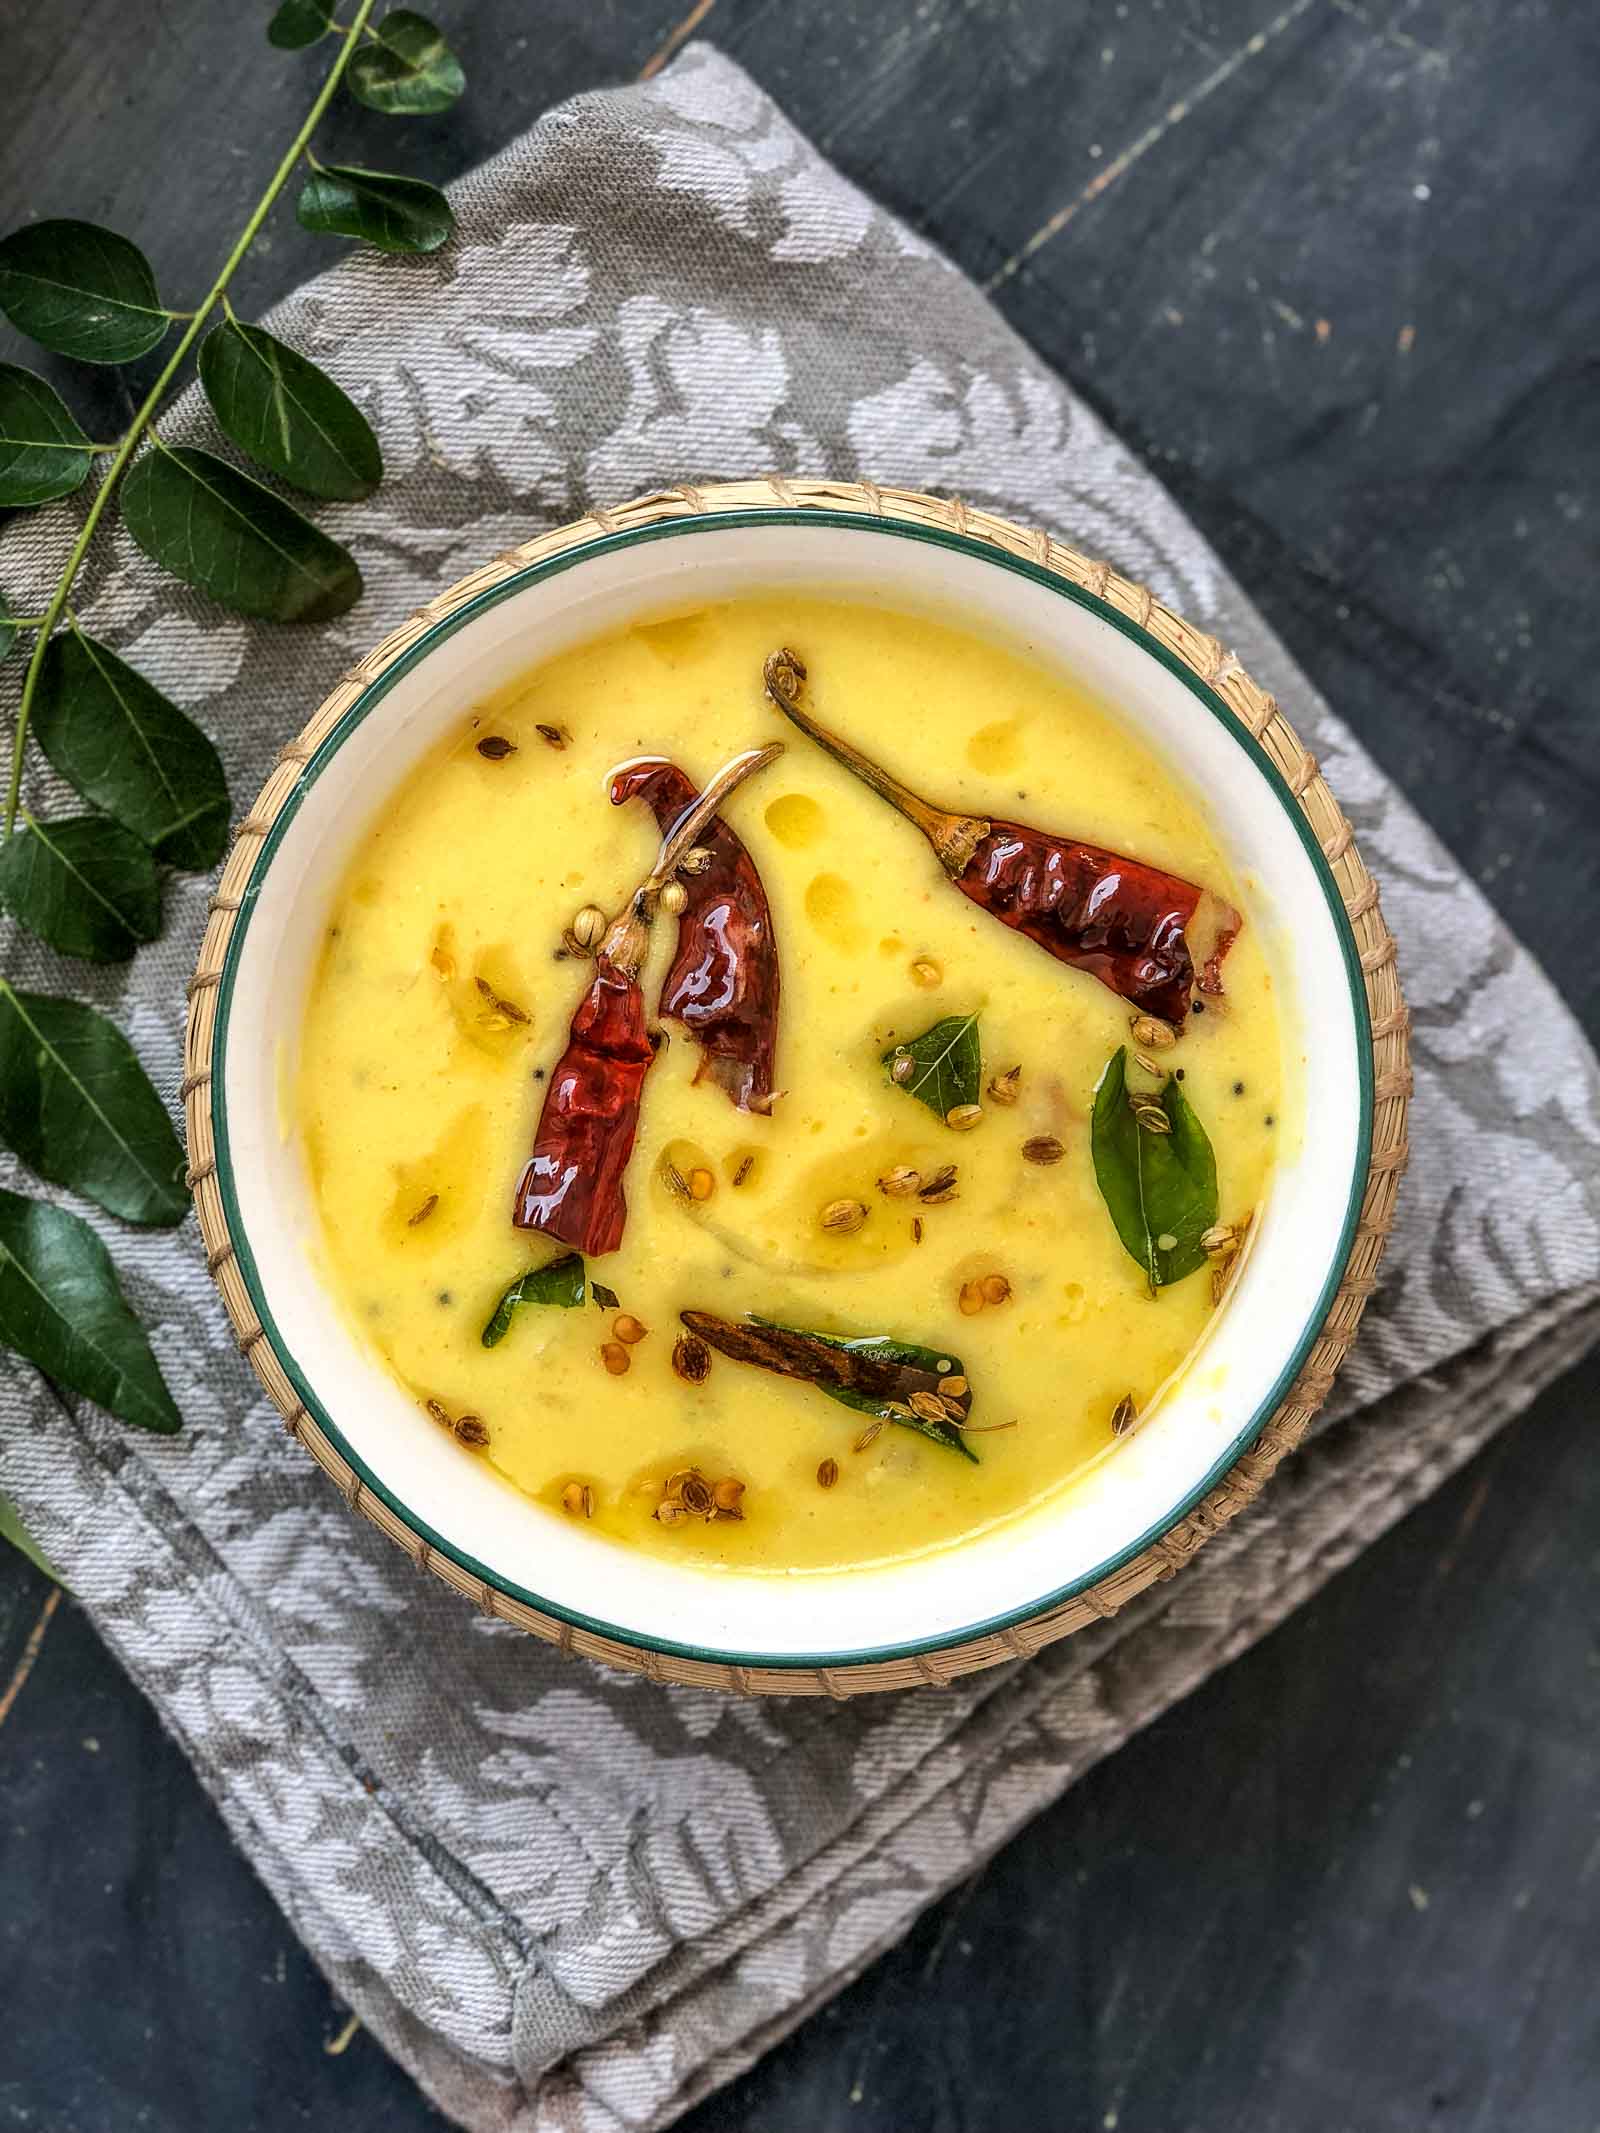 राजस्थानी प्याज की कढ़ी रेसिपी - Rajasthani Pyaaz Ki Kadhi Recipe